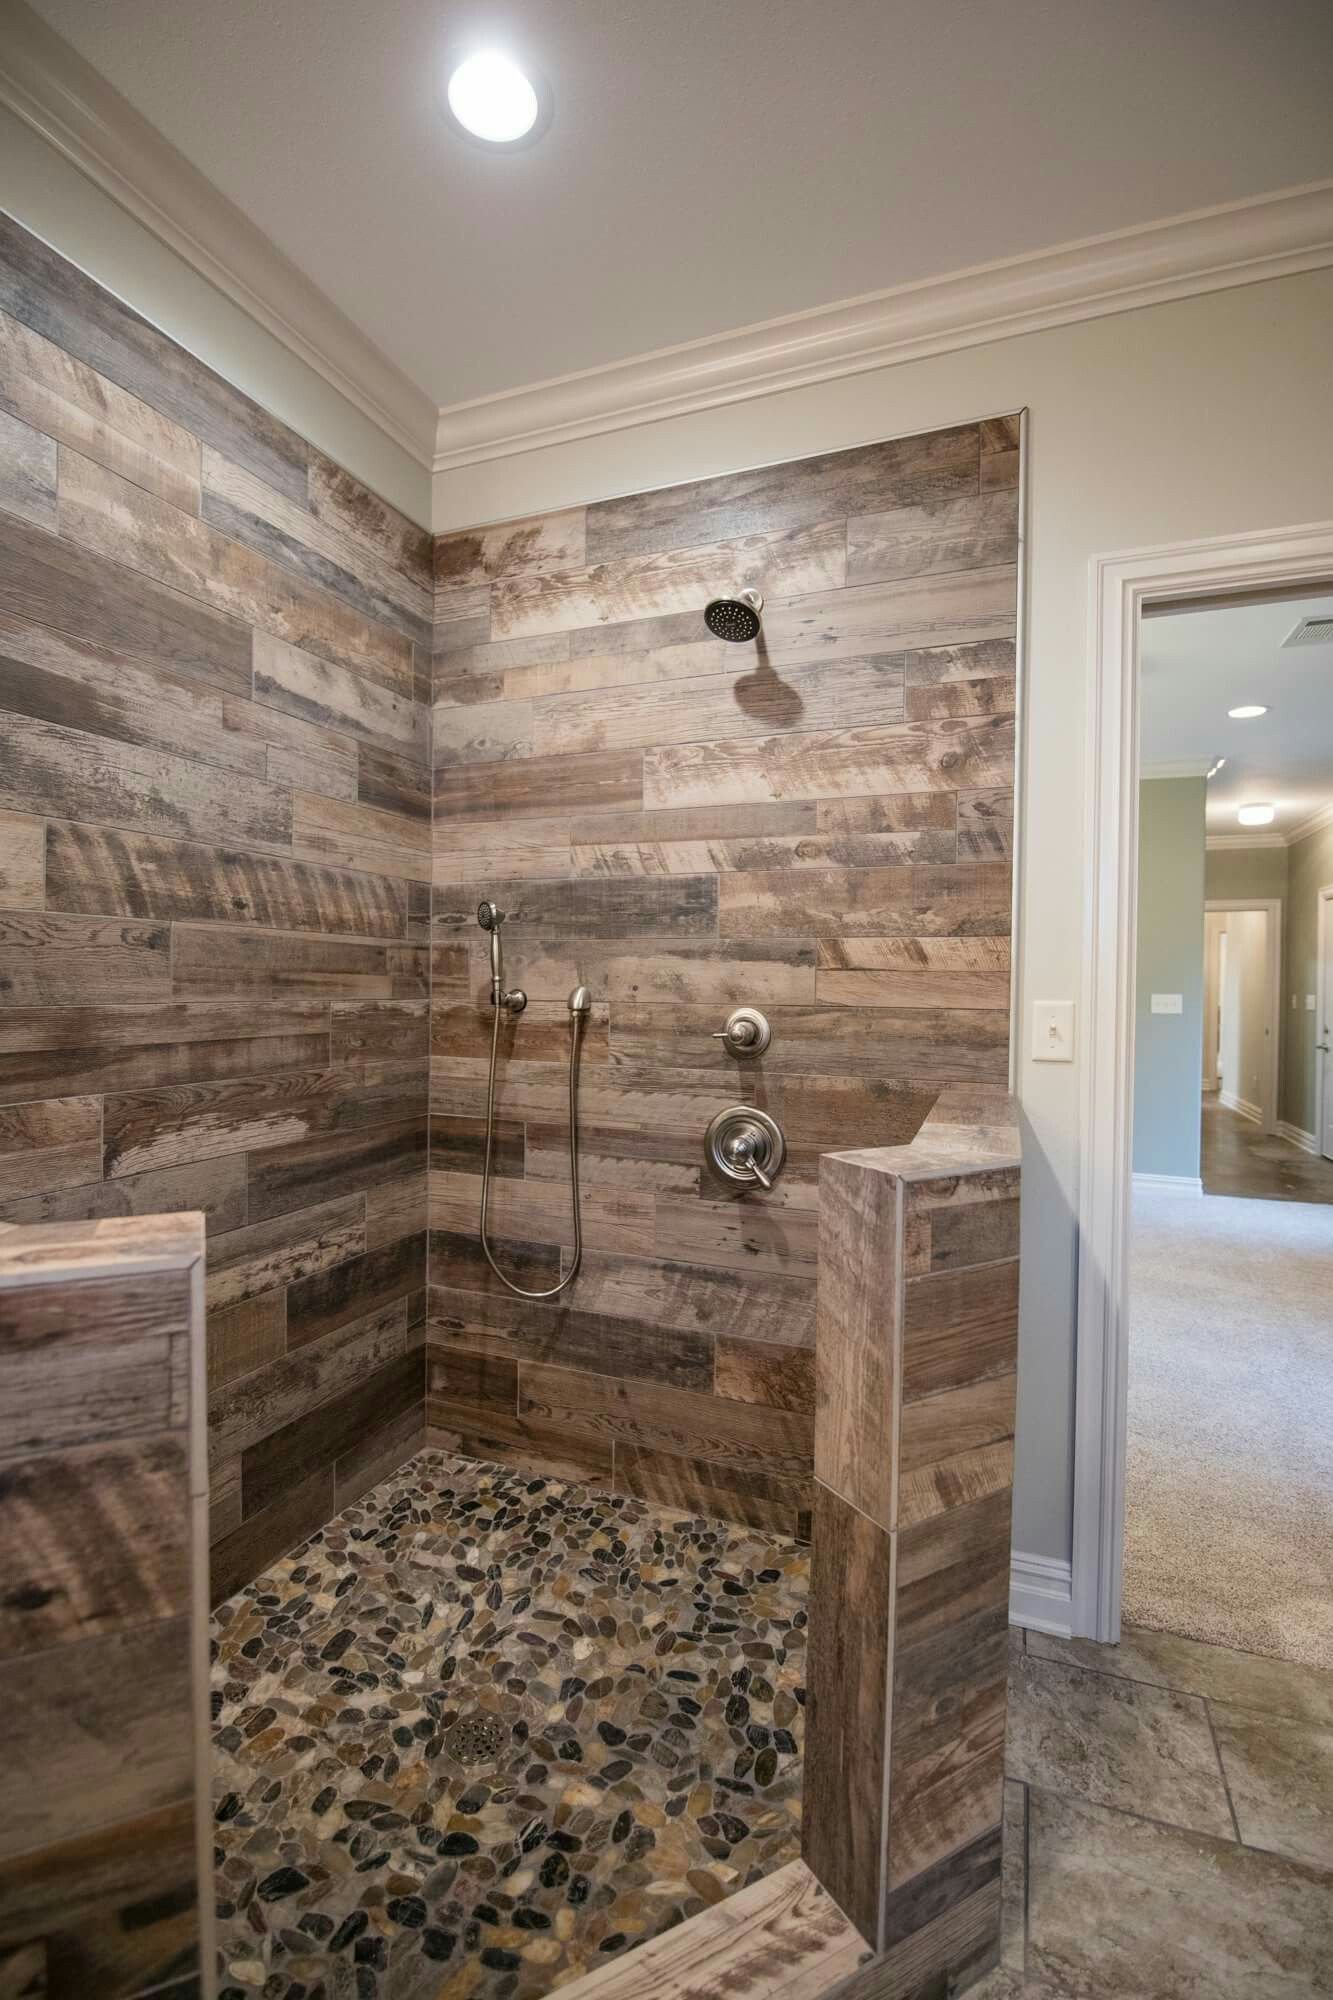 Master Bathroom Shower Tile Ideas
 Tile for master shower